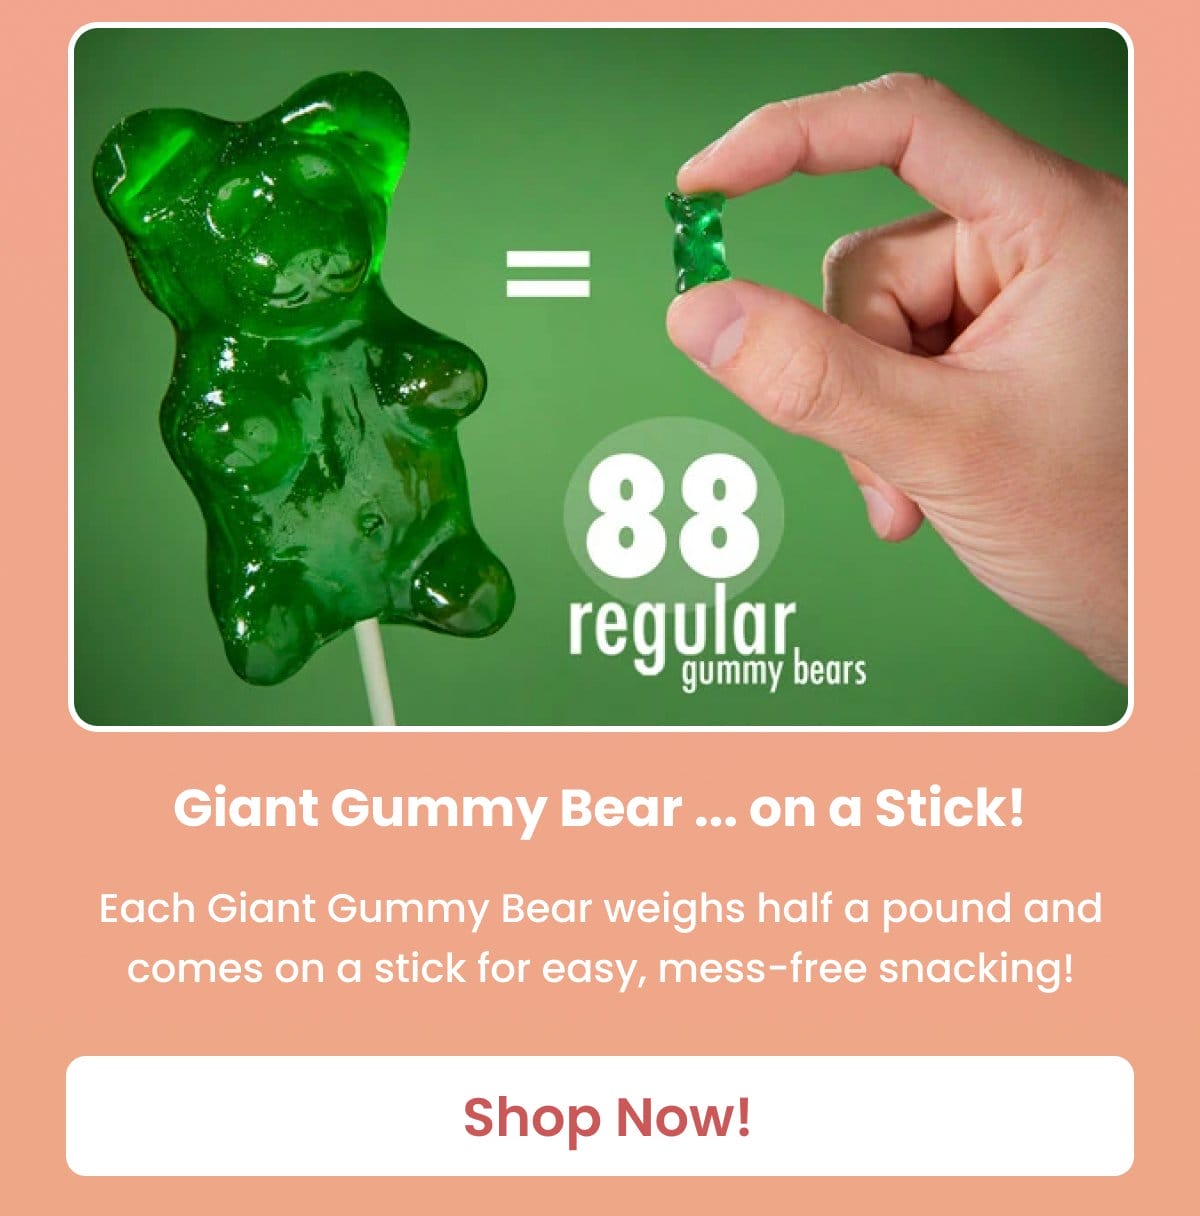 Giant Gummy Bear ... on a Stick